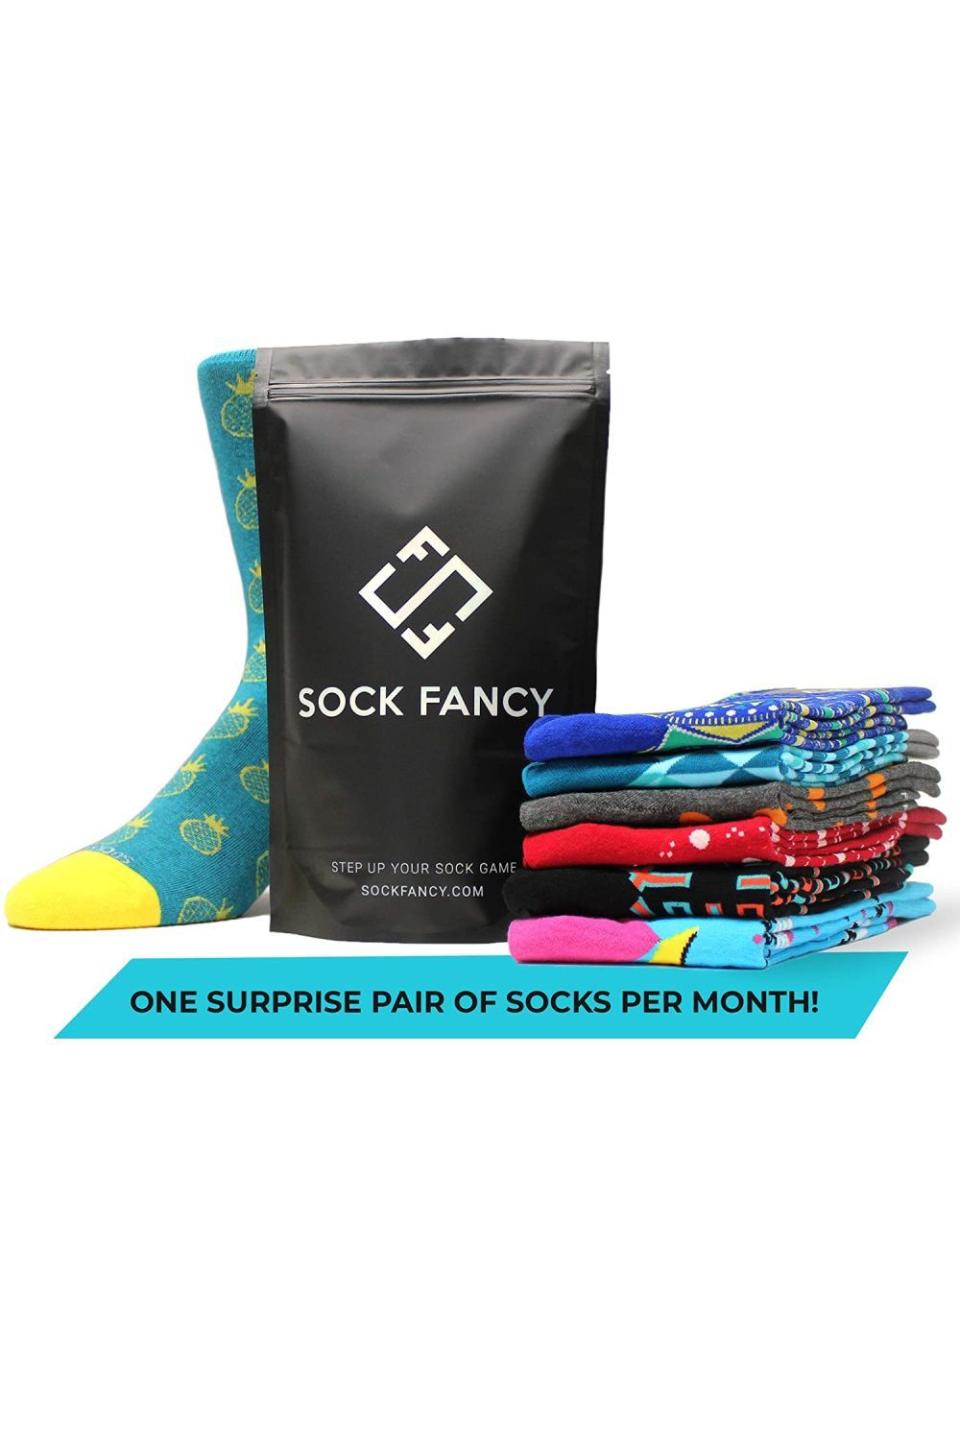 6) Surprise Pair of Socks Subscription: Crew Socks